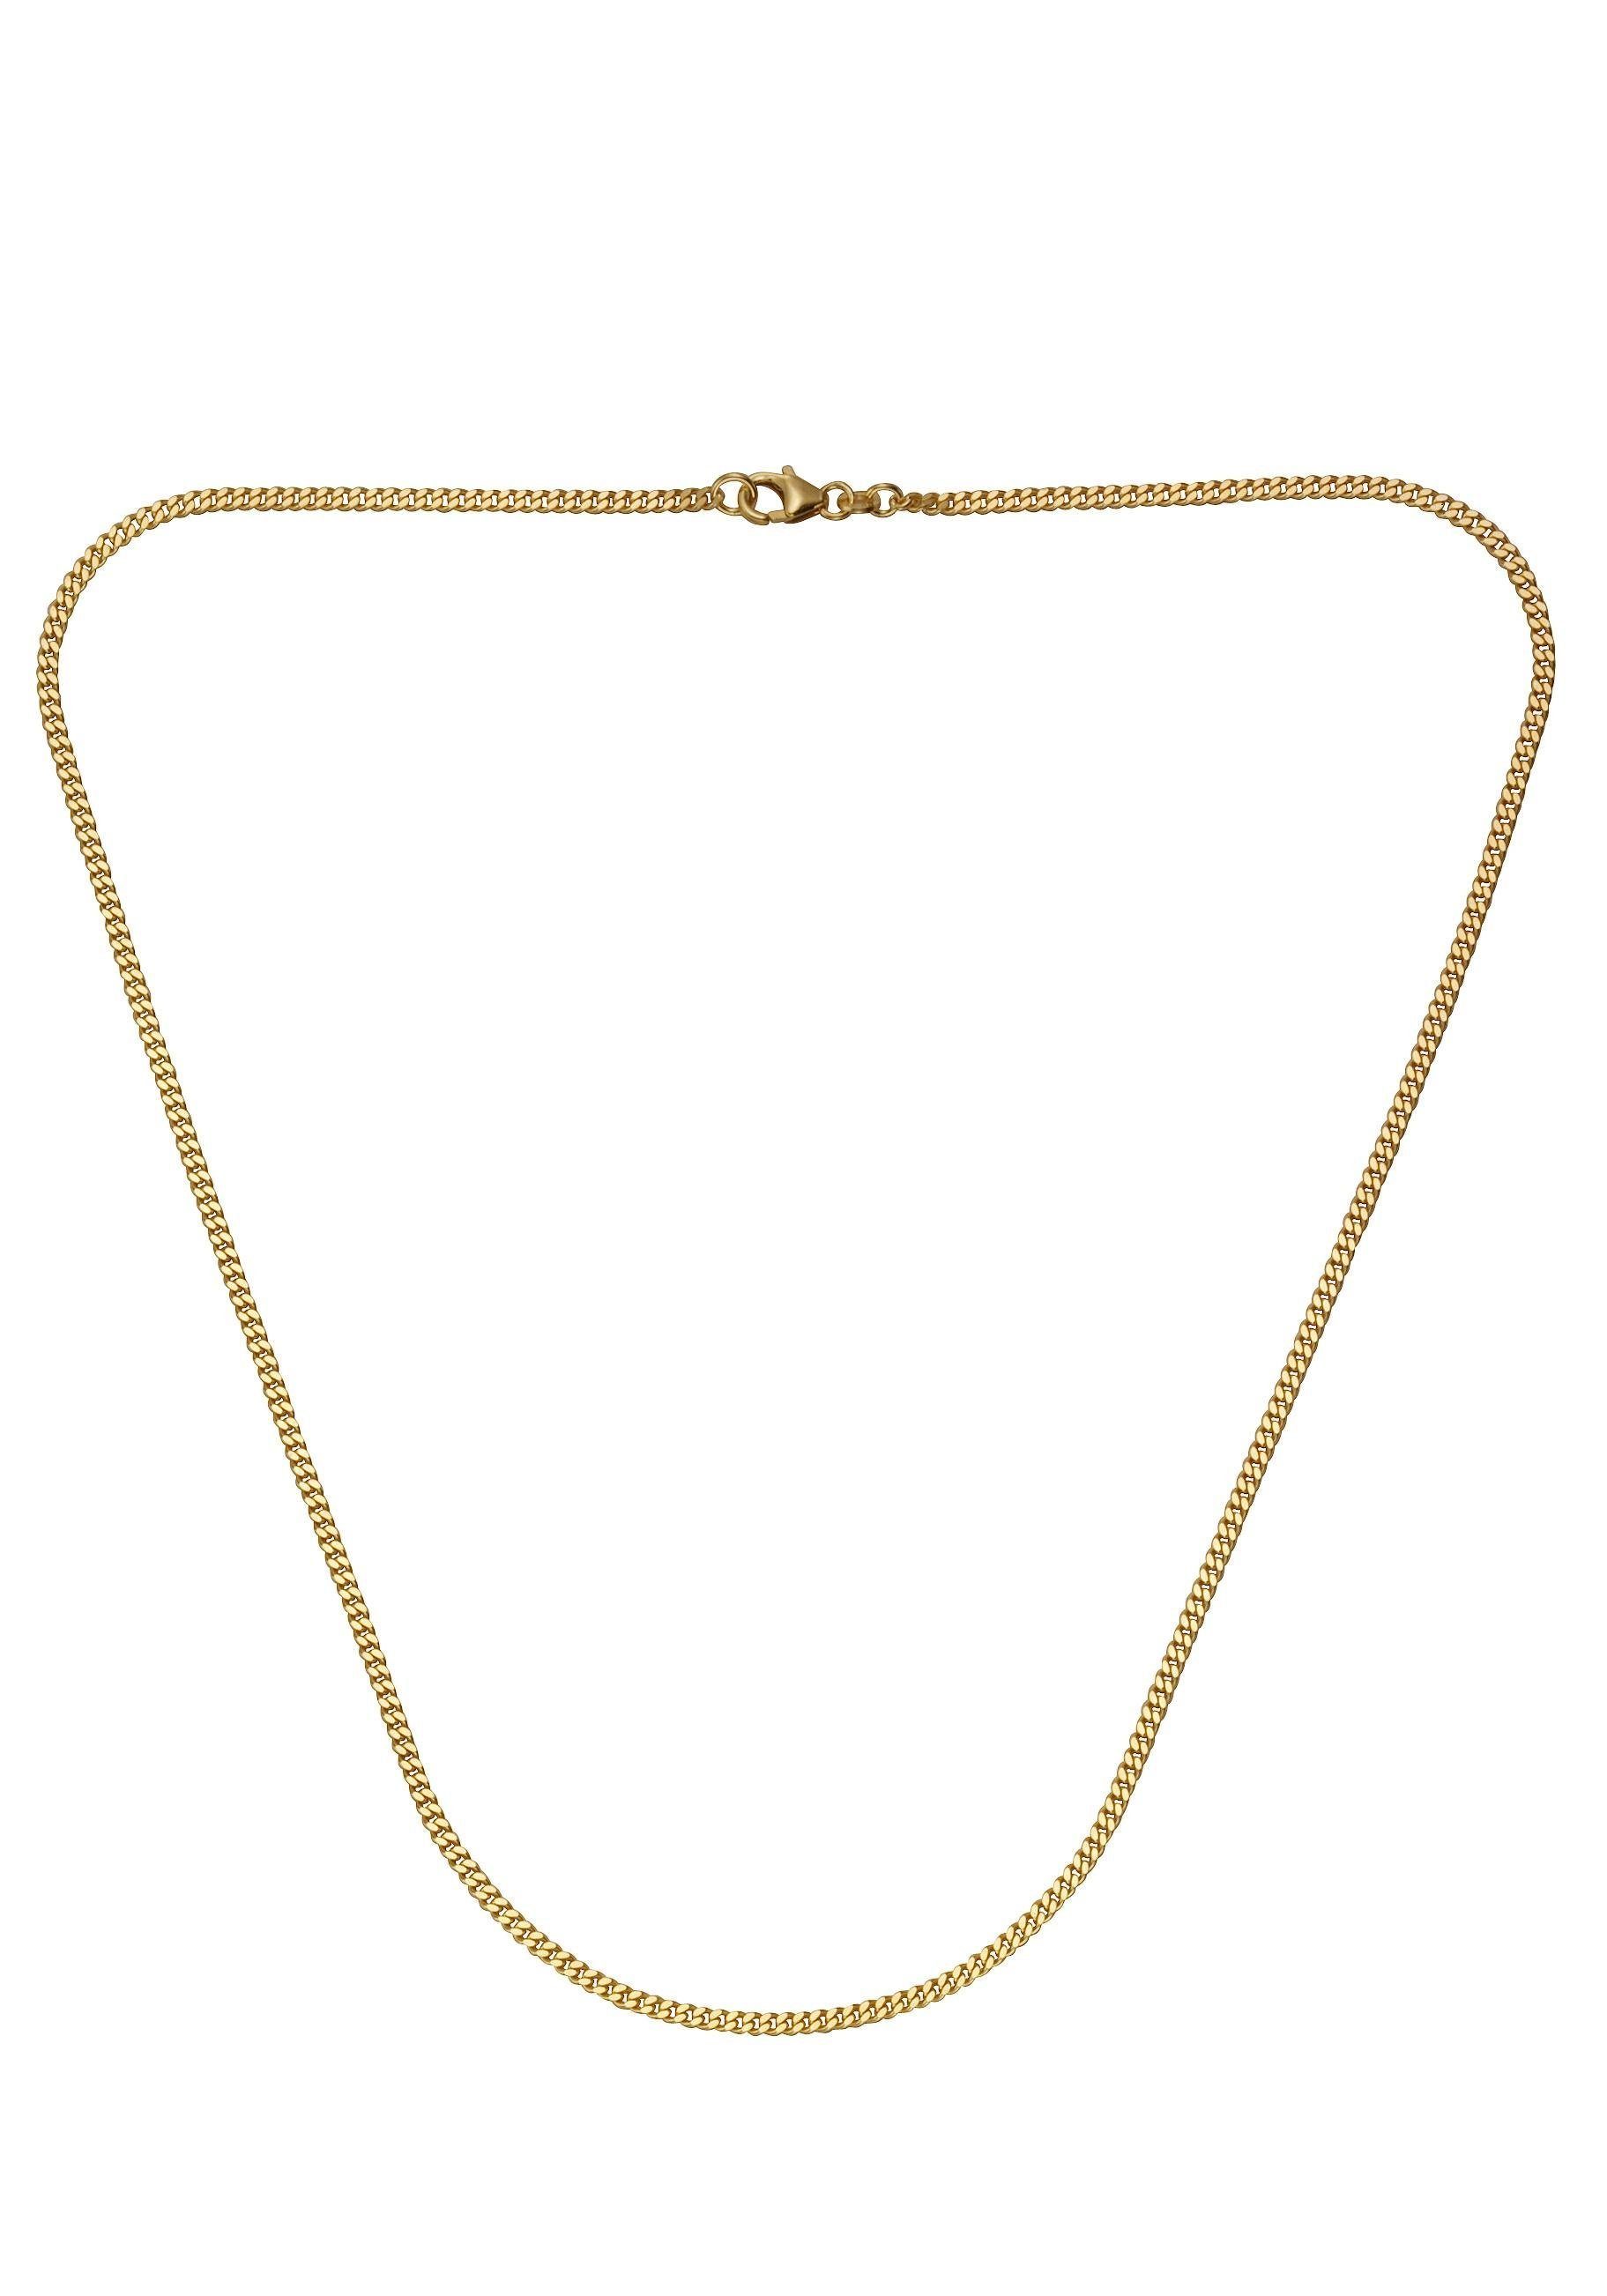 Firetti Collier Schmuck Geschenk Gold 750 Halsschmuck Halskette Goldkette Panzerkette, zu Kleid, Shirt, Jeans, Sneaker! Anlass Geburtstag Weihnachten | Ketten ohne Anhänger